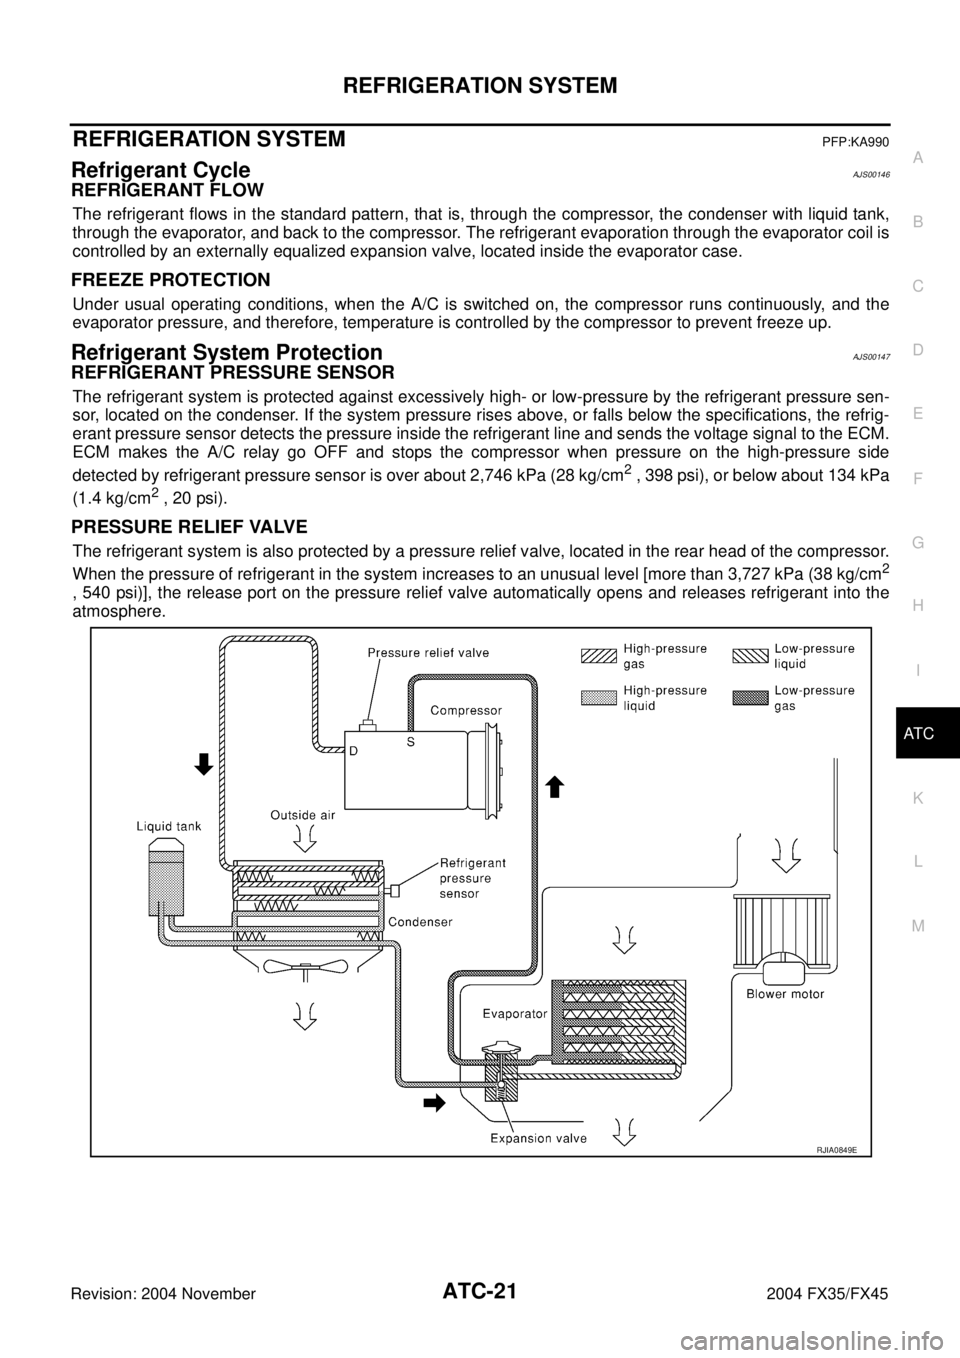 INFINITI FX35 2004  Service Manual REFRIGERATION SYSTEM
ATC-21
C
D
E
F
G
H
I
K
L
MA
B
AT C
Revision: 2004 November 2004 FX35/FX45
REFRIGERATION SYSTEMPFP:KA990
Refrigerant CycleAJS00146
REFRIGERANT FLOW
The refrigerant flows in the sta